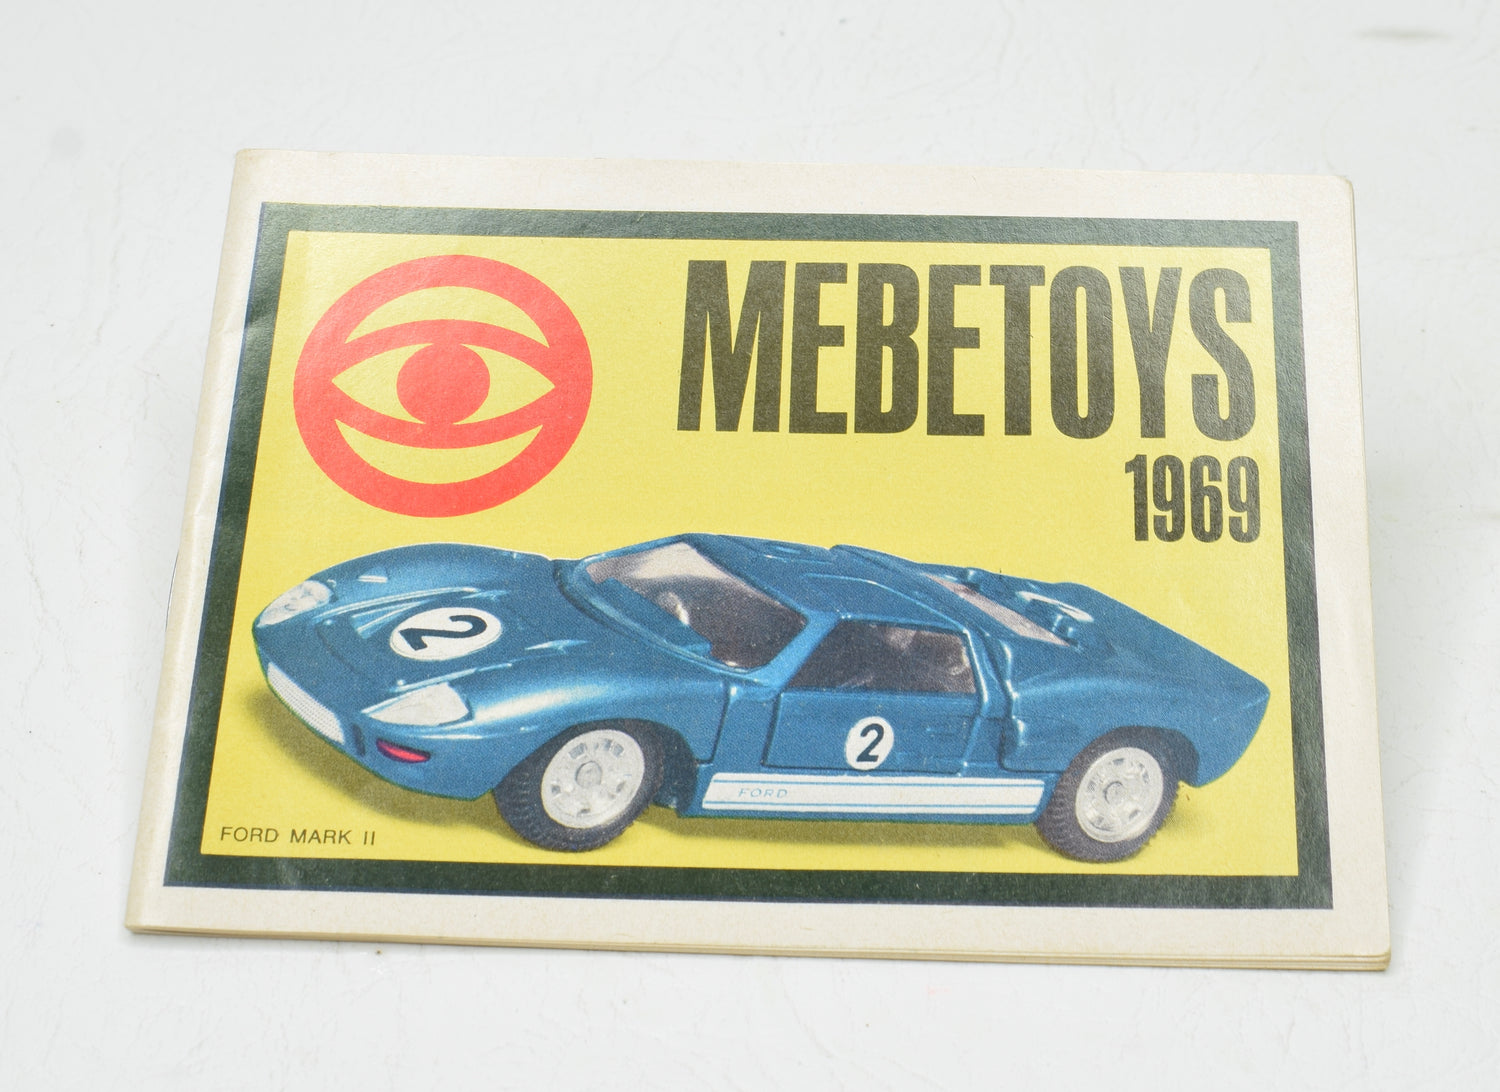 Mebetoys 1969 Model Catalogue Mint